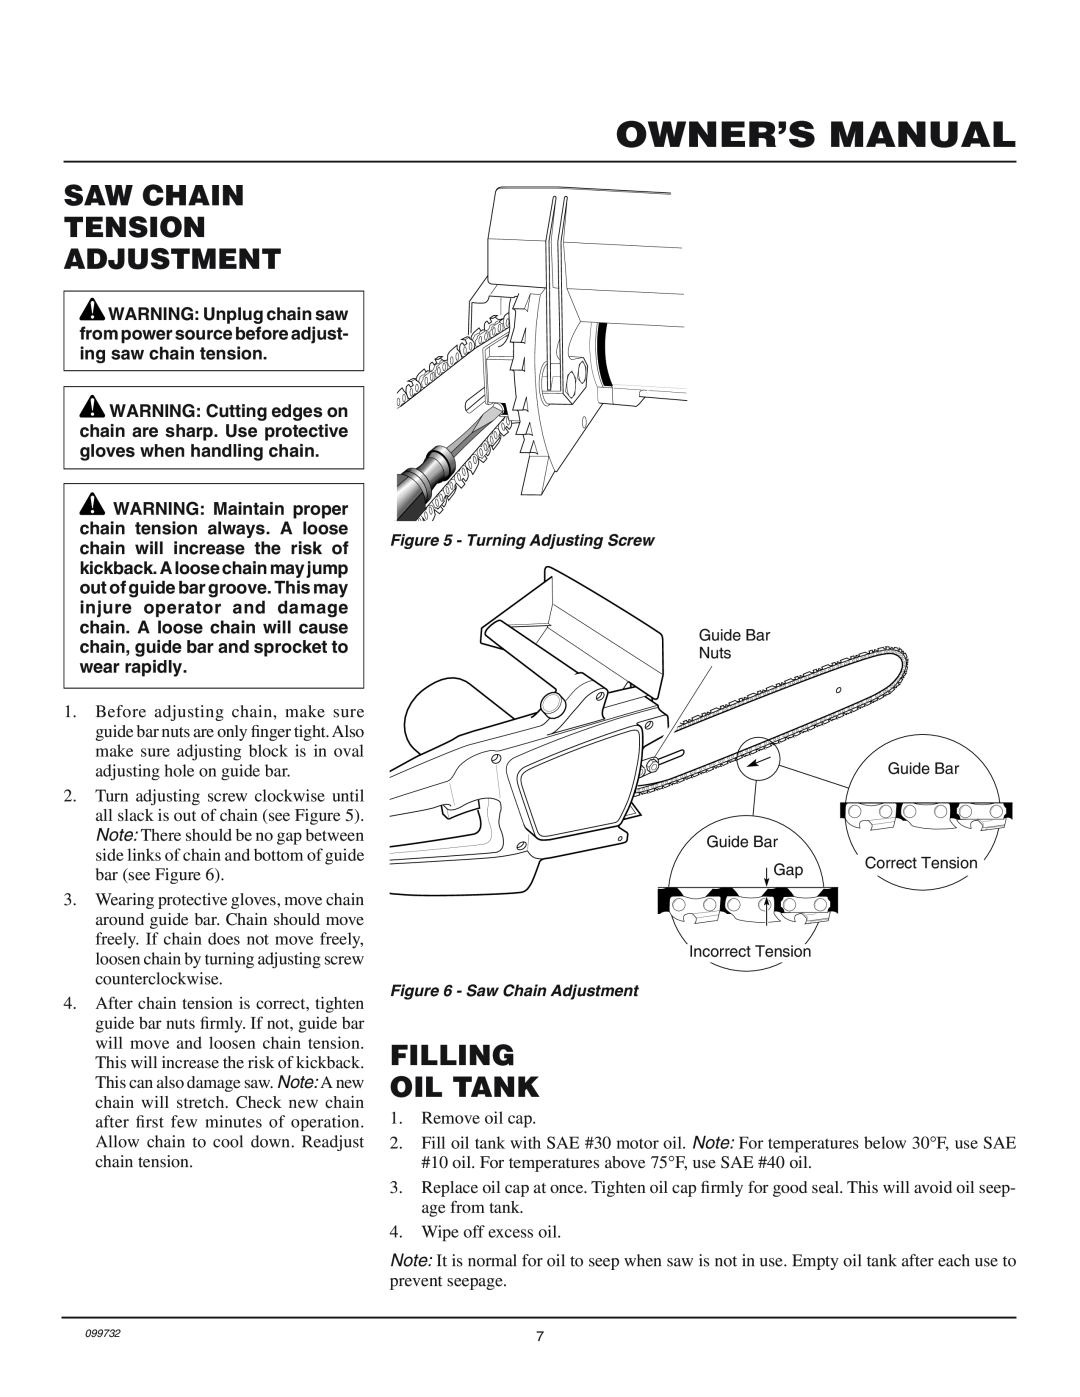 Homelite EL12, EL16 owner manual Saw Chain Tension Adjustment, Filling Oil Tank 